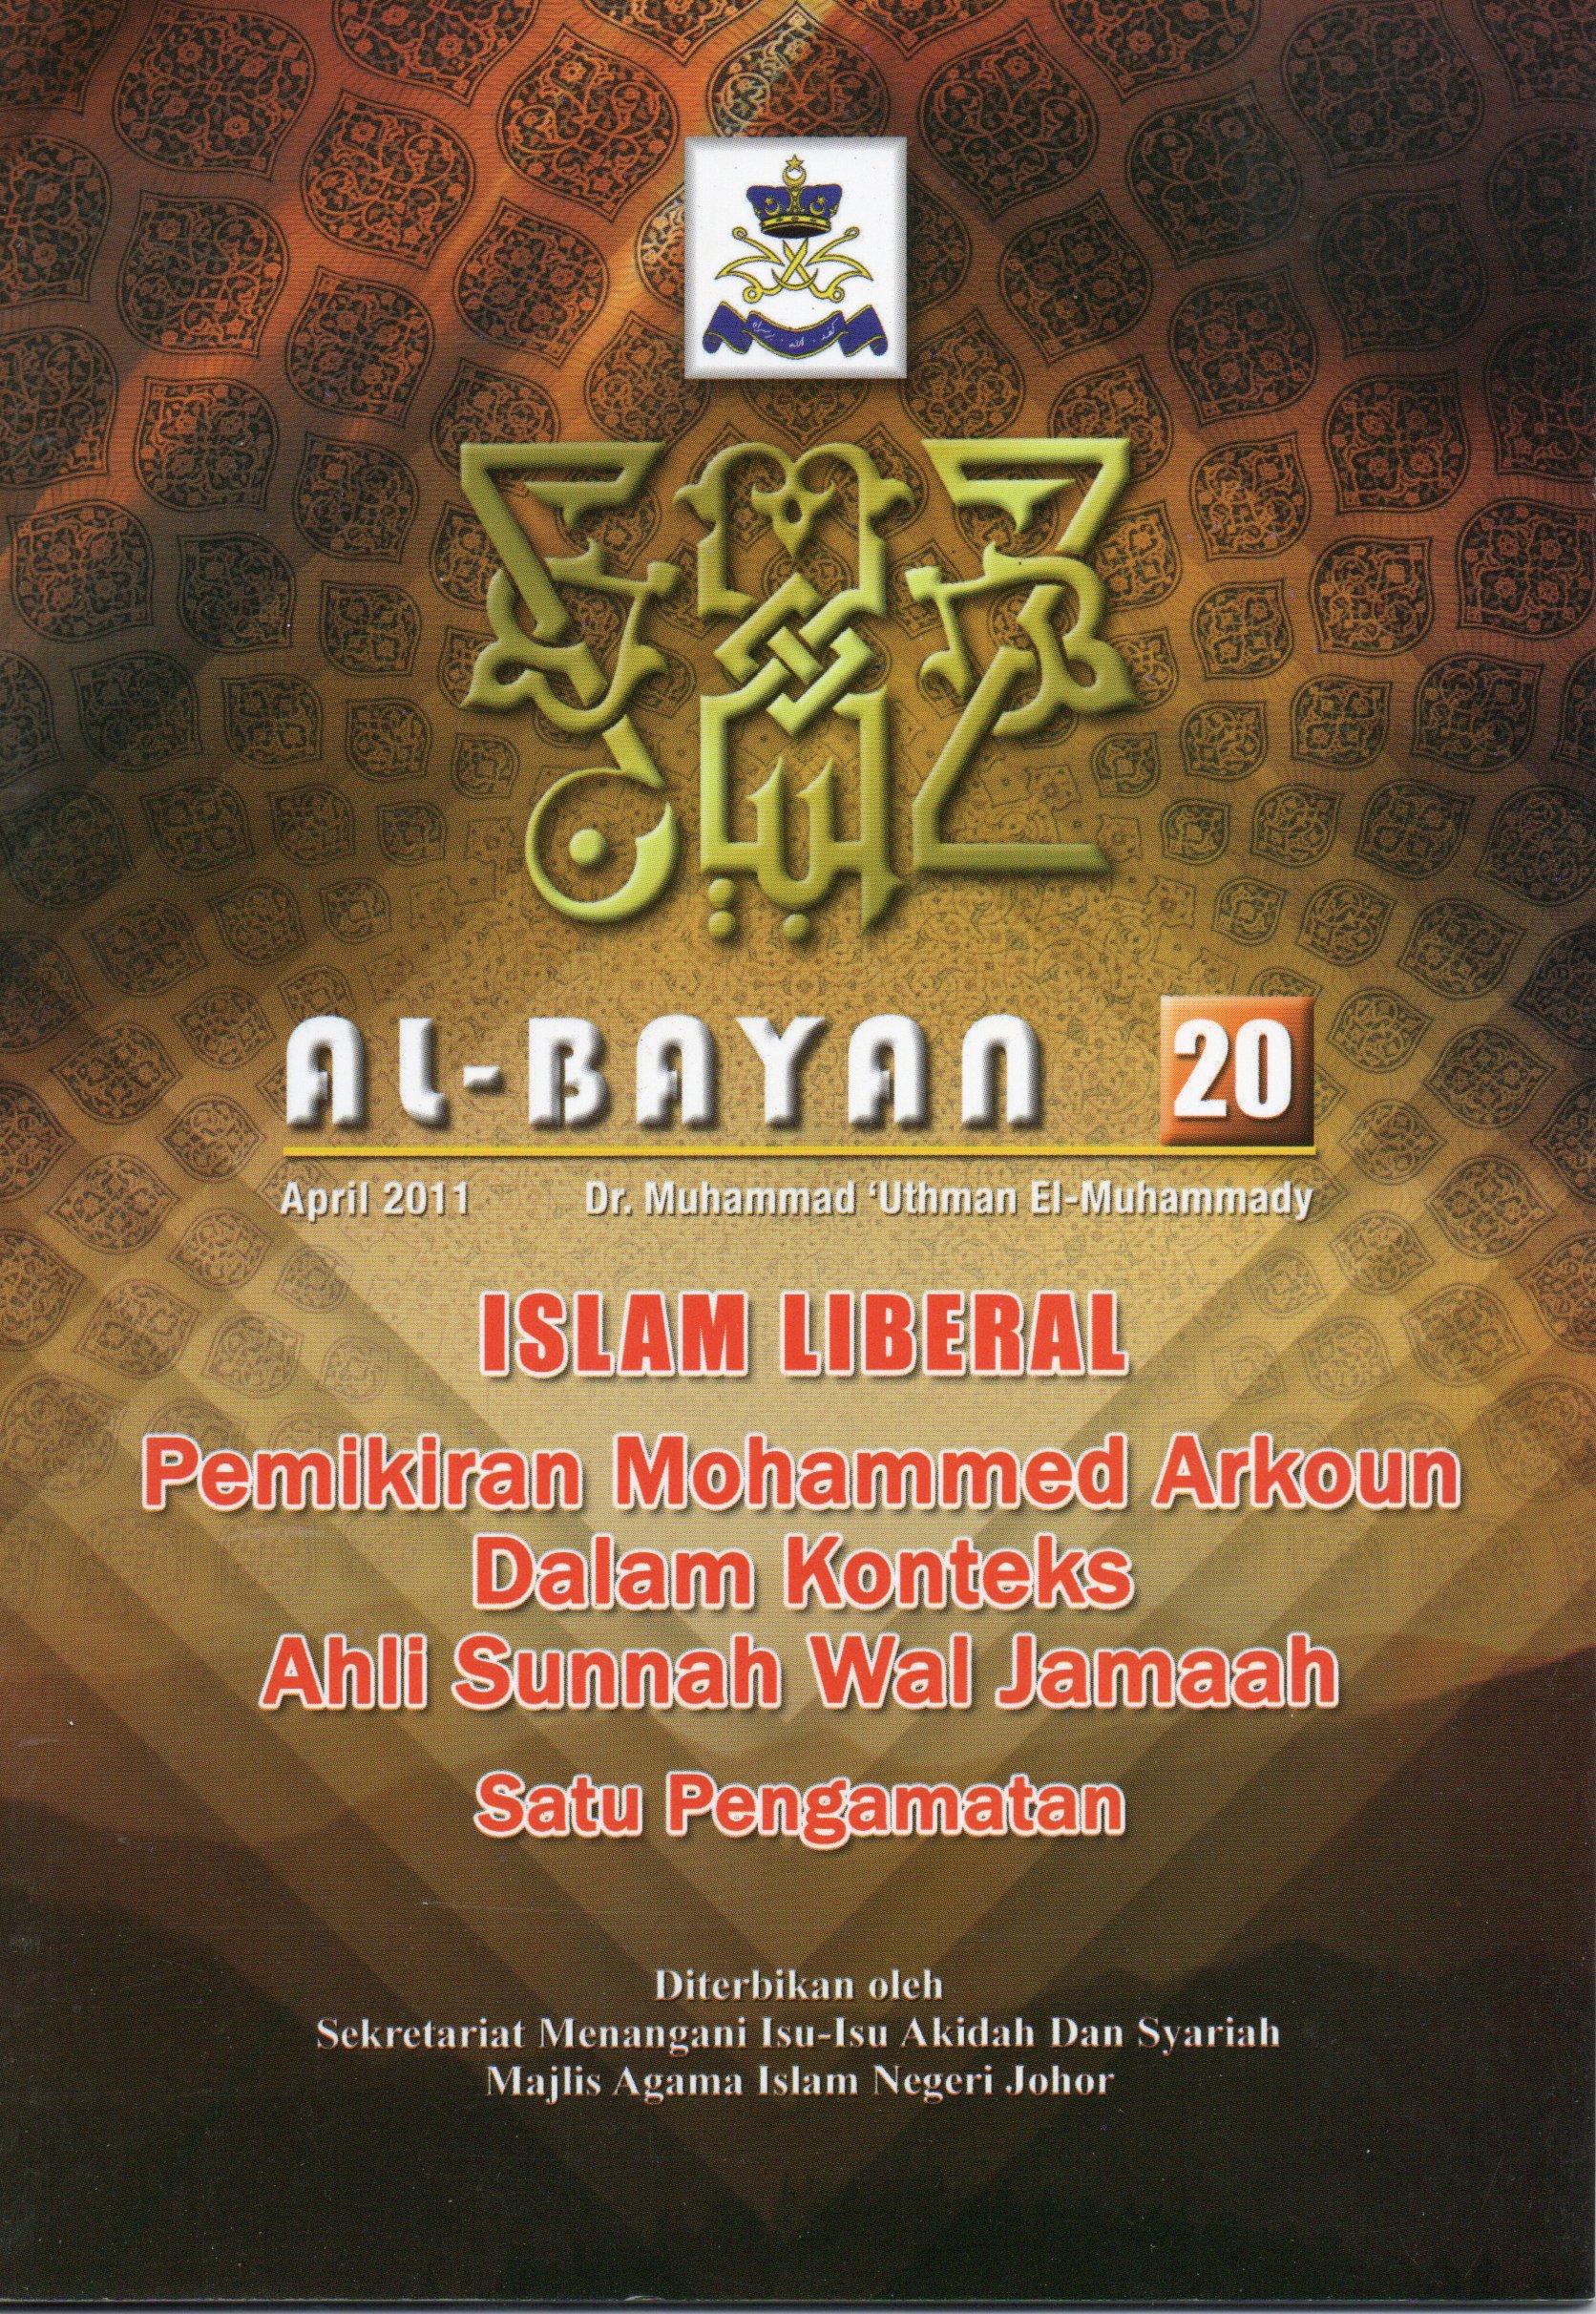 Al-Bayan 20: Islam liberal, pemikiraan Mohammed Arkoun dalam konteks ahli sunnah wal jamaah